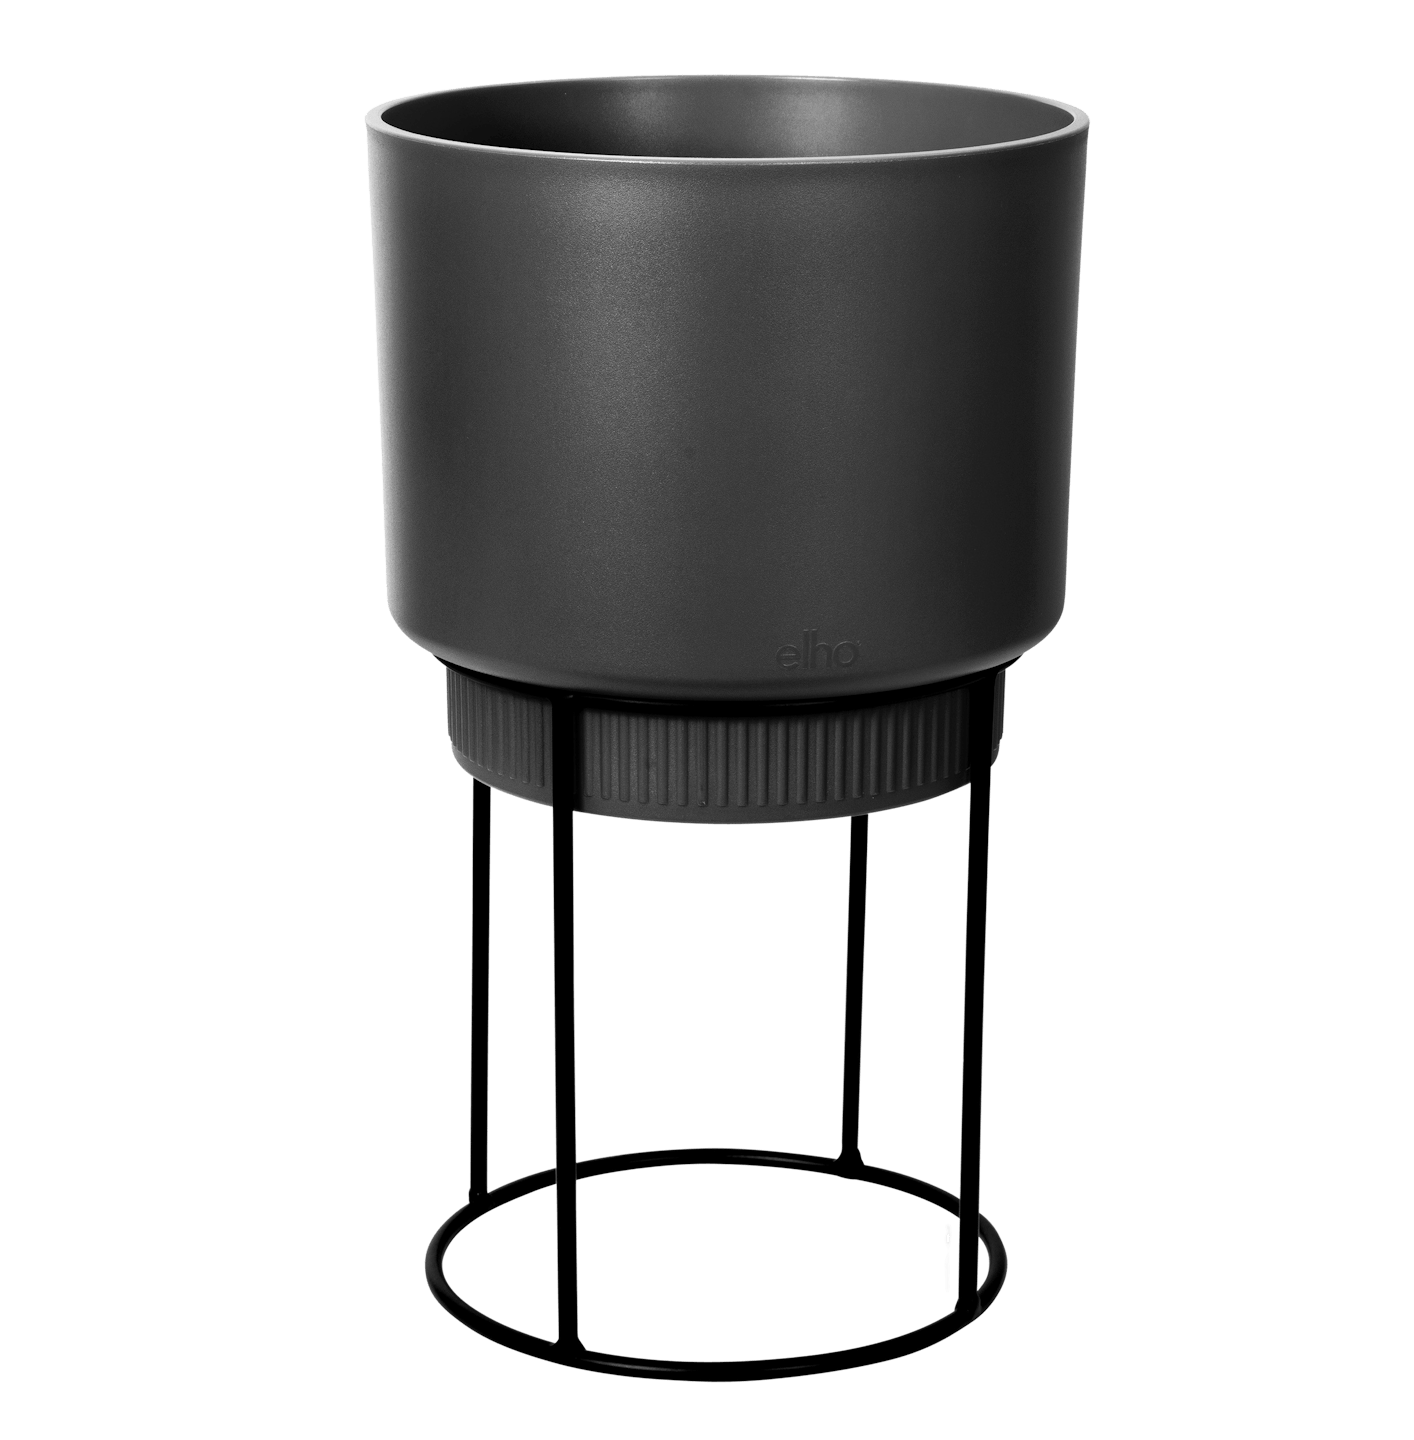 Black b.for studio round pot